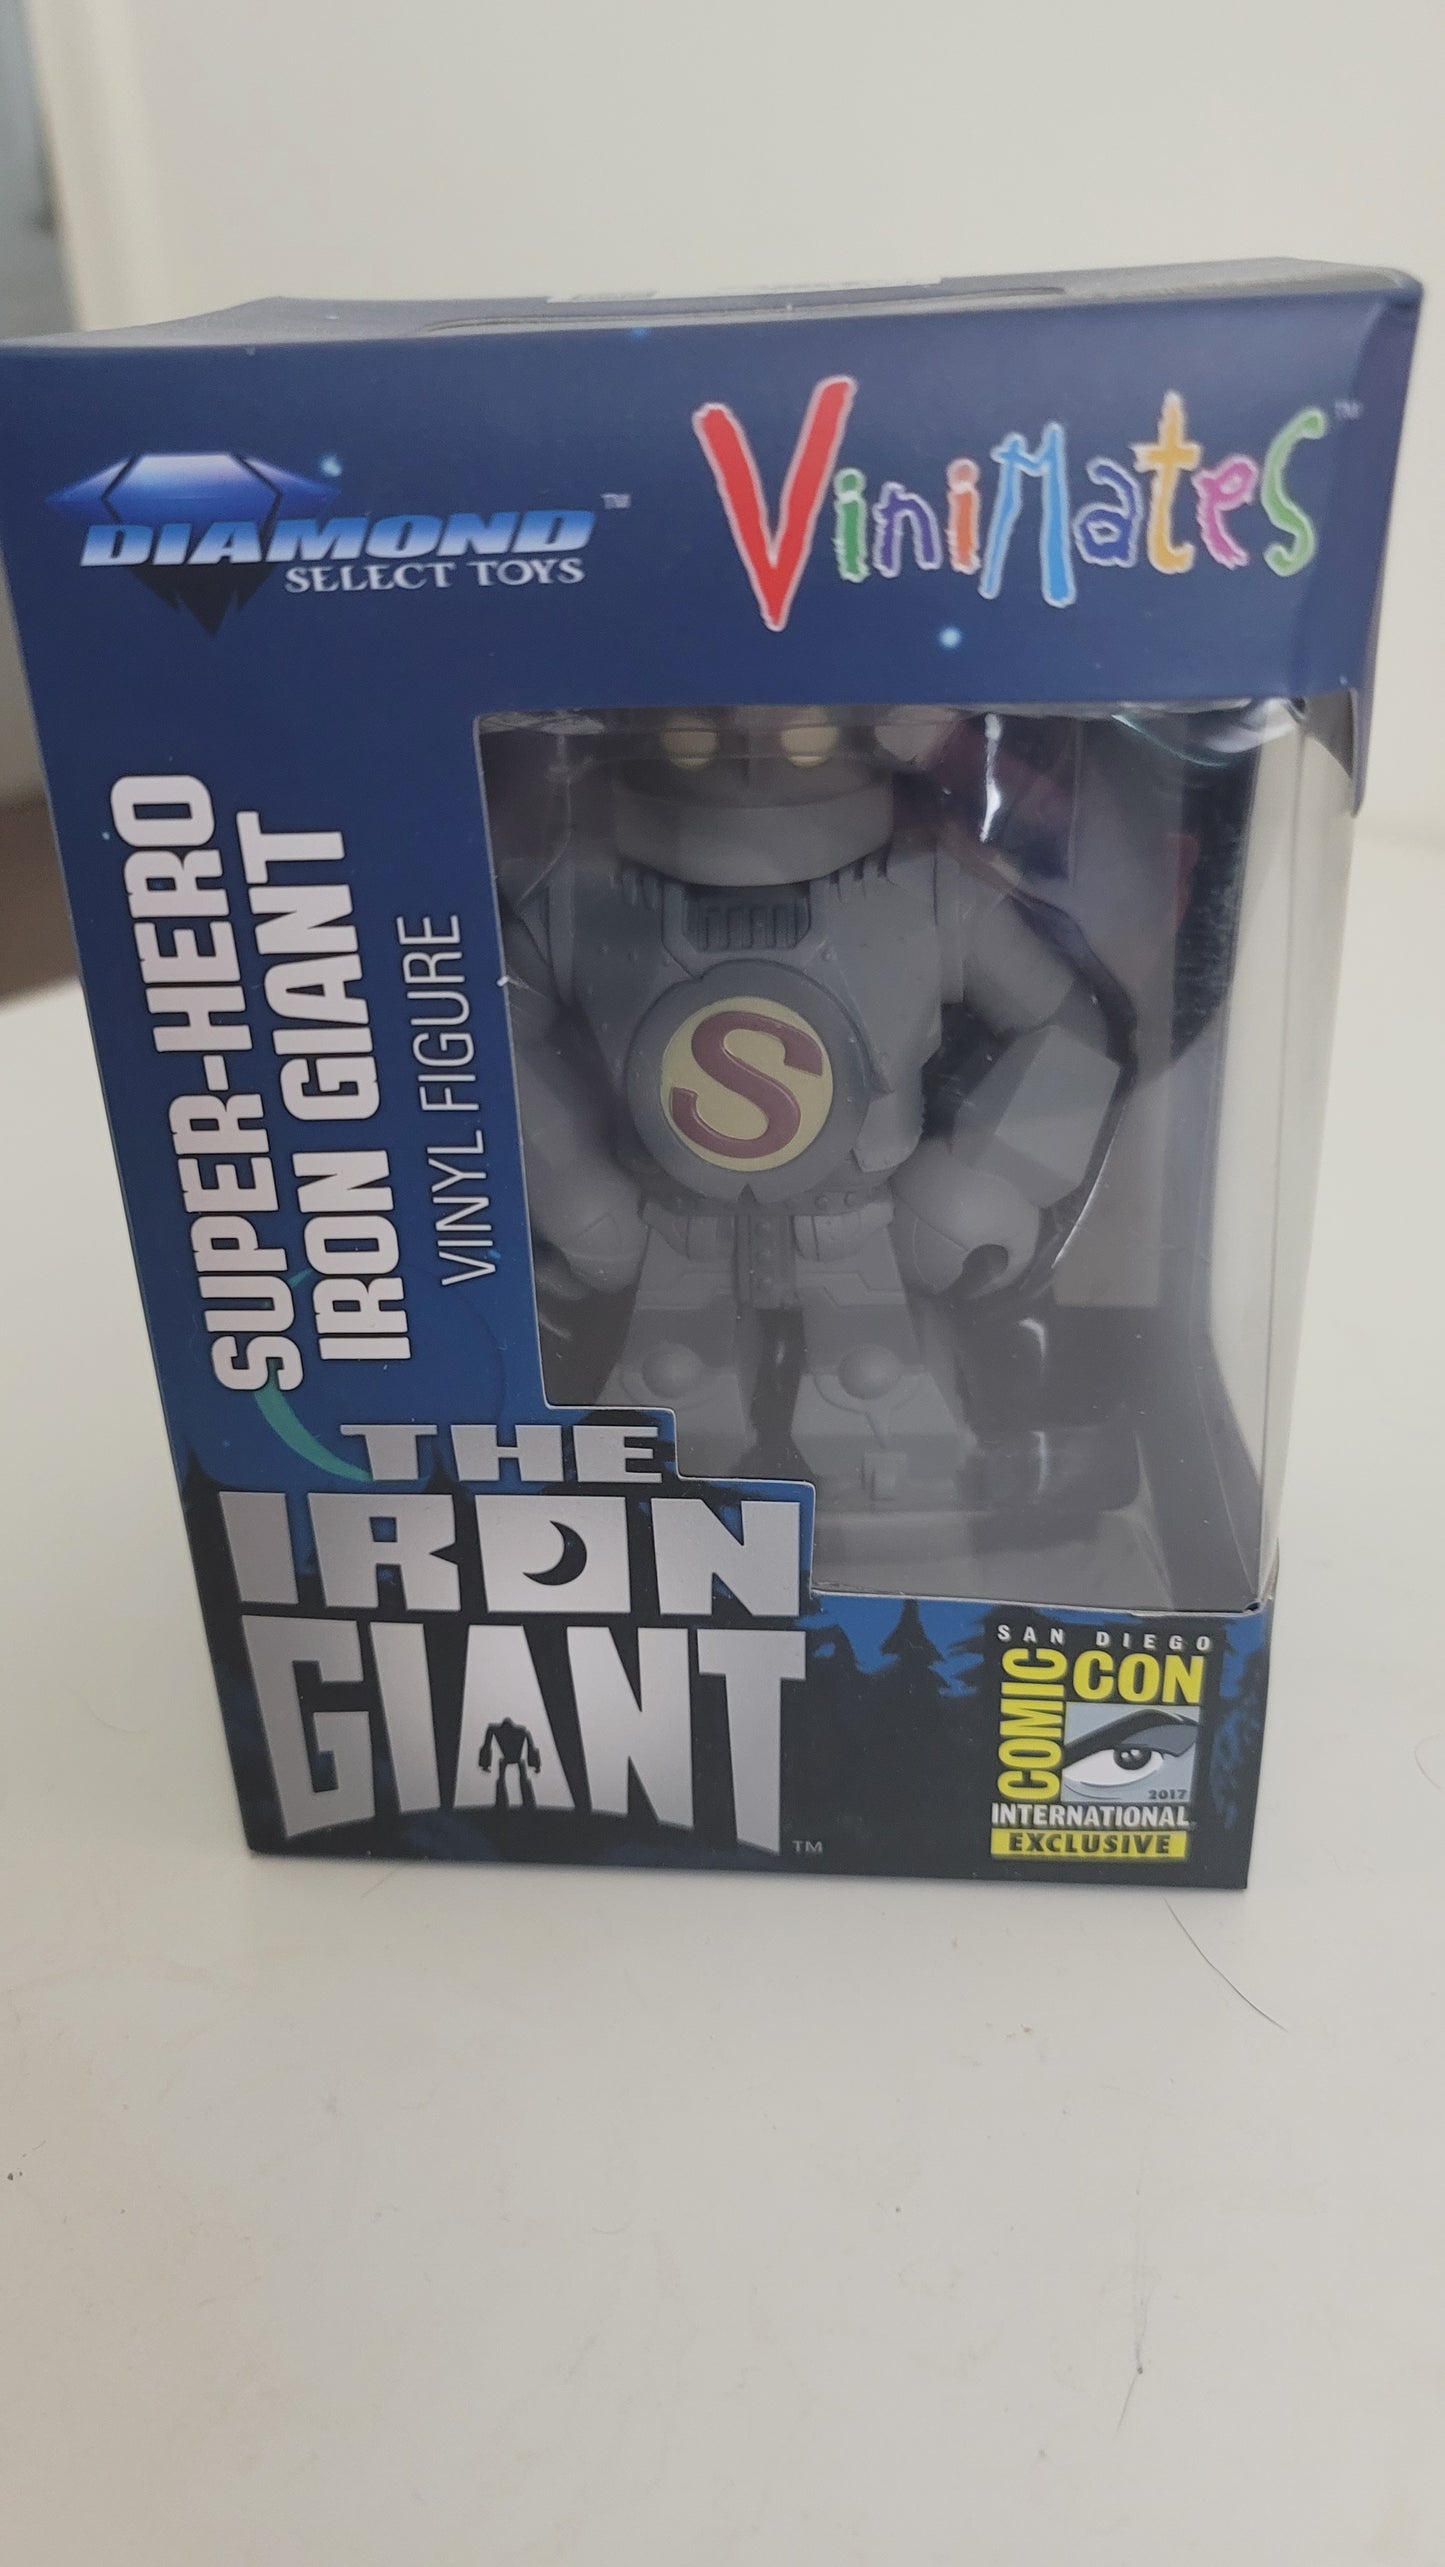 ViniMates Super Hero Iron Giant